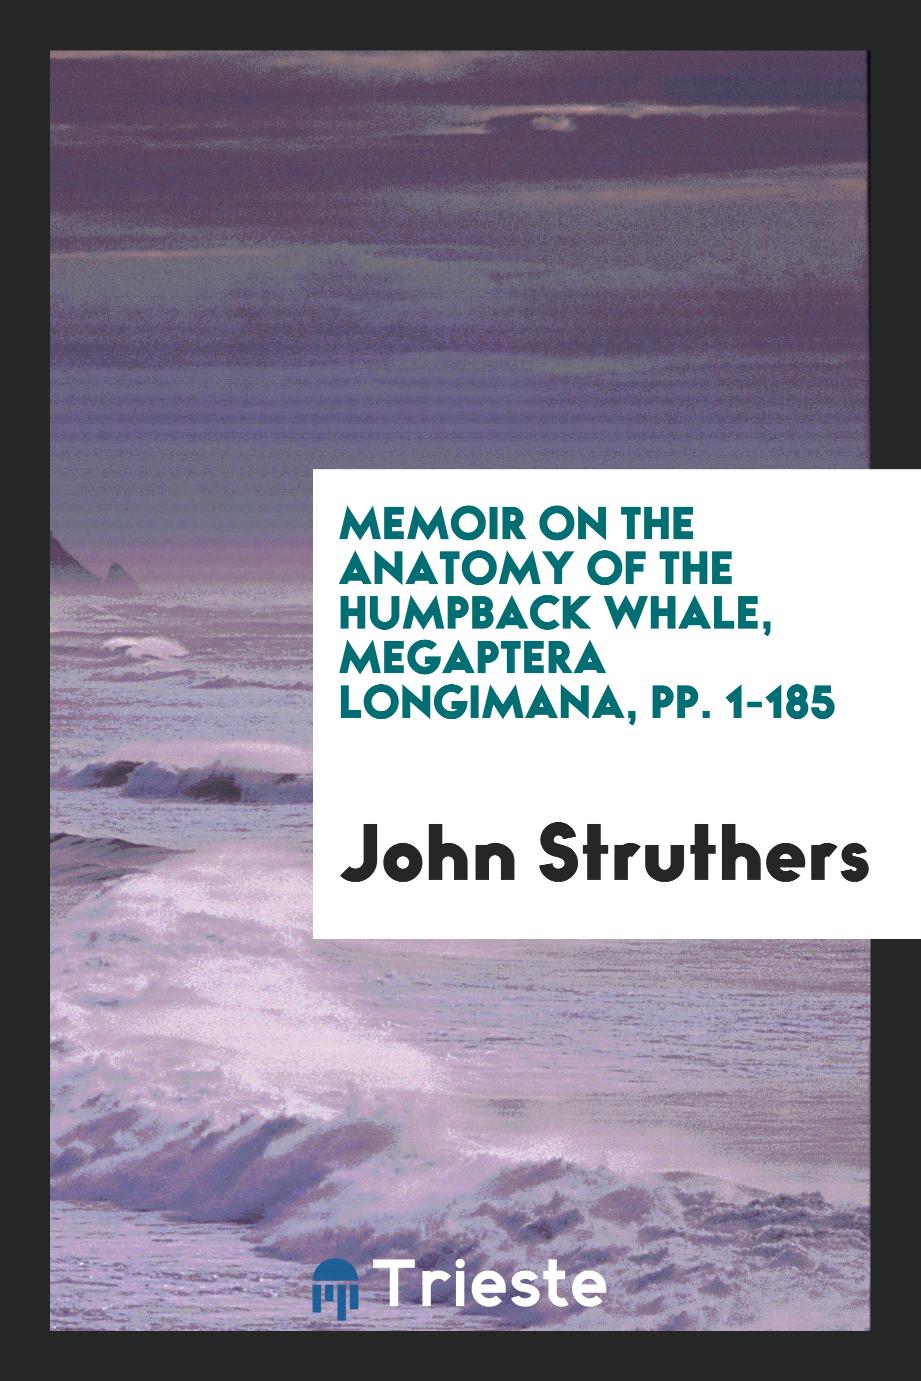 Memoir on the Anatomy of the Humpback Whale, Megaptera Longimana, pp. 1-185